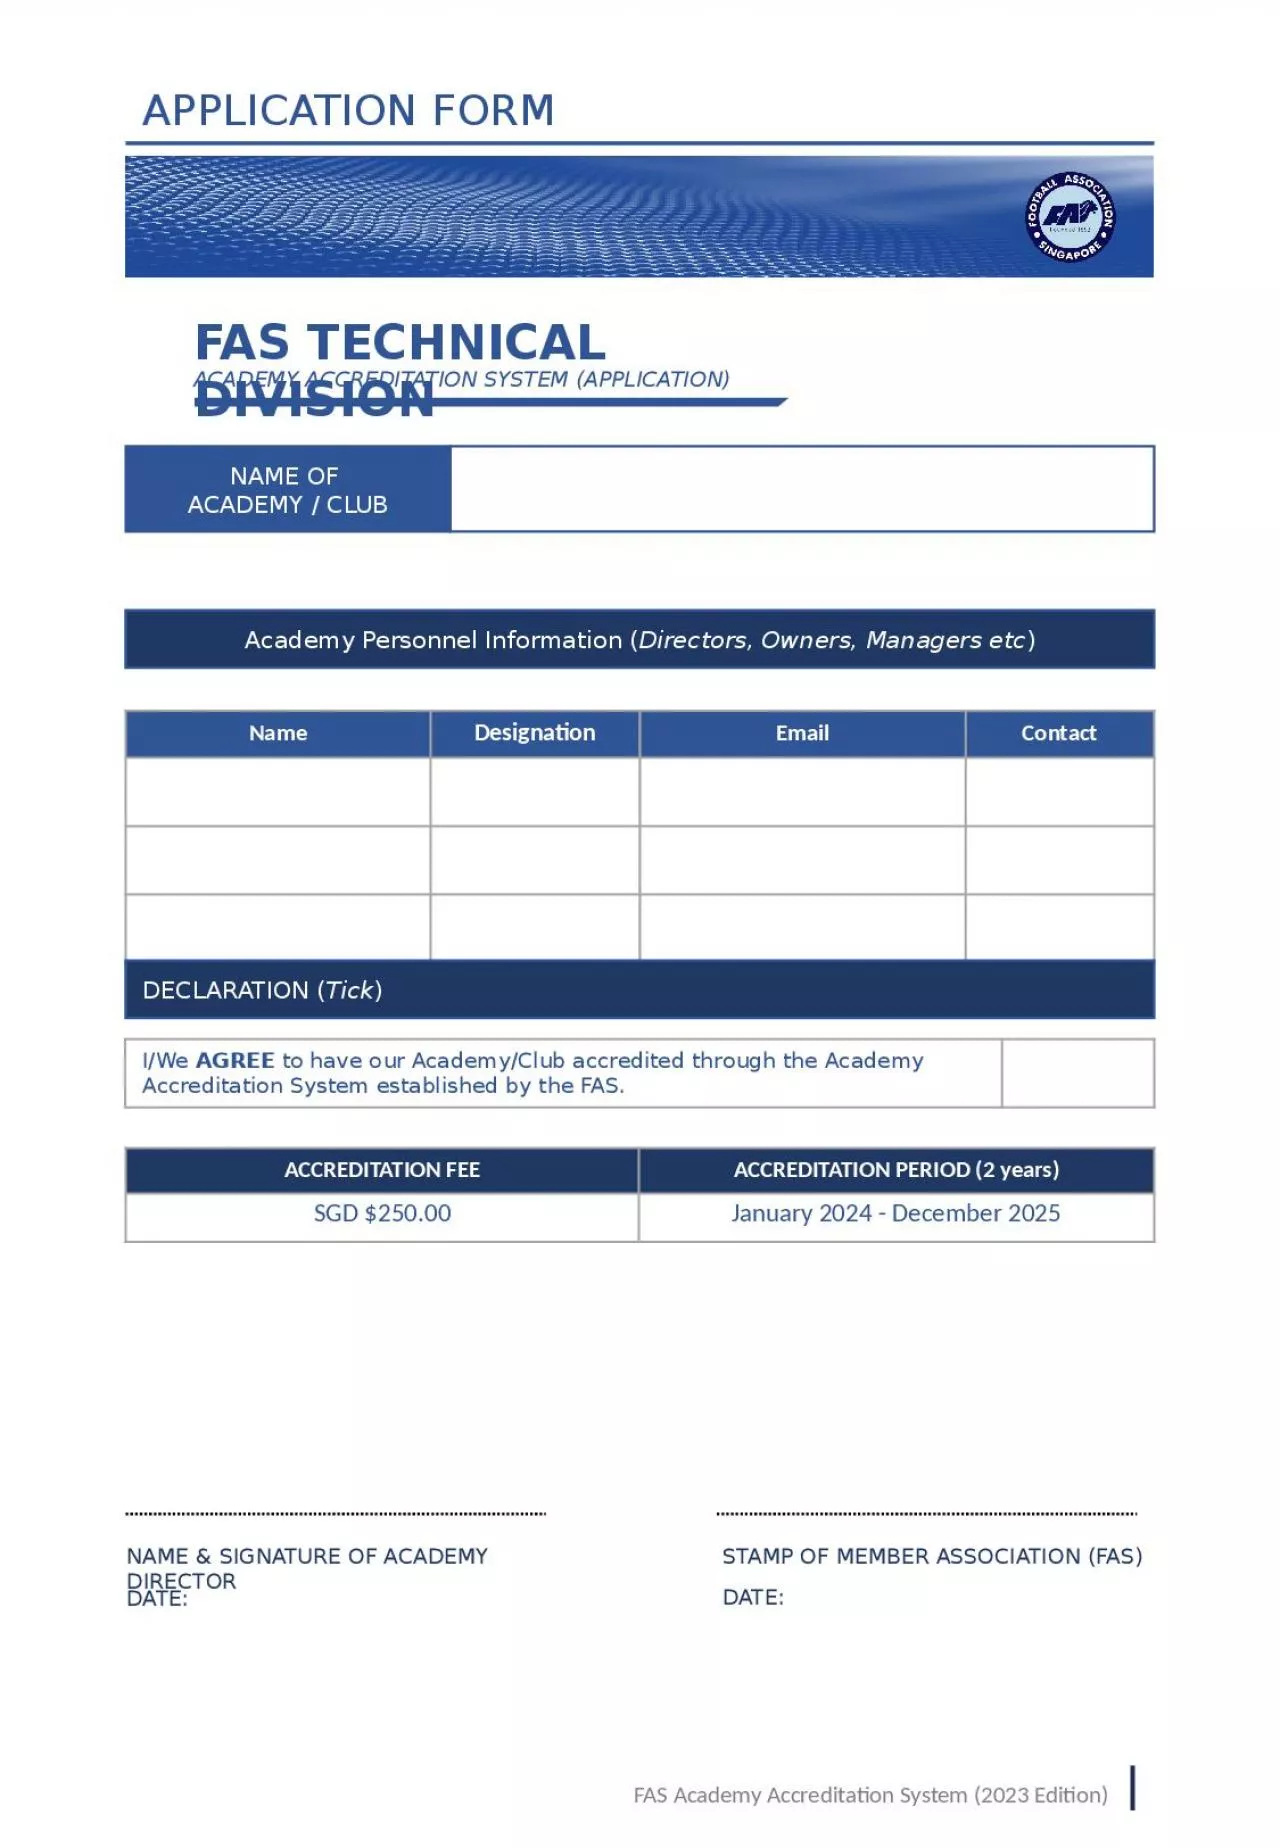 FAS Academy Accreditation System (2023 Edition)